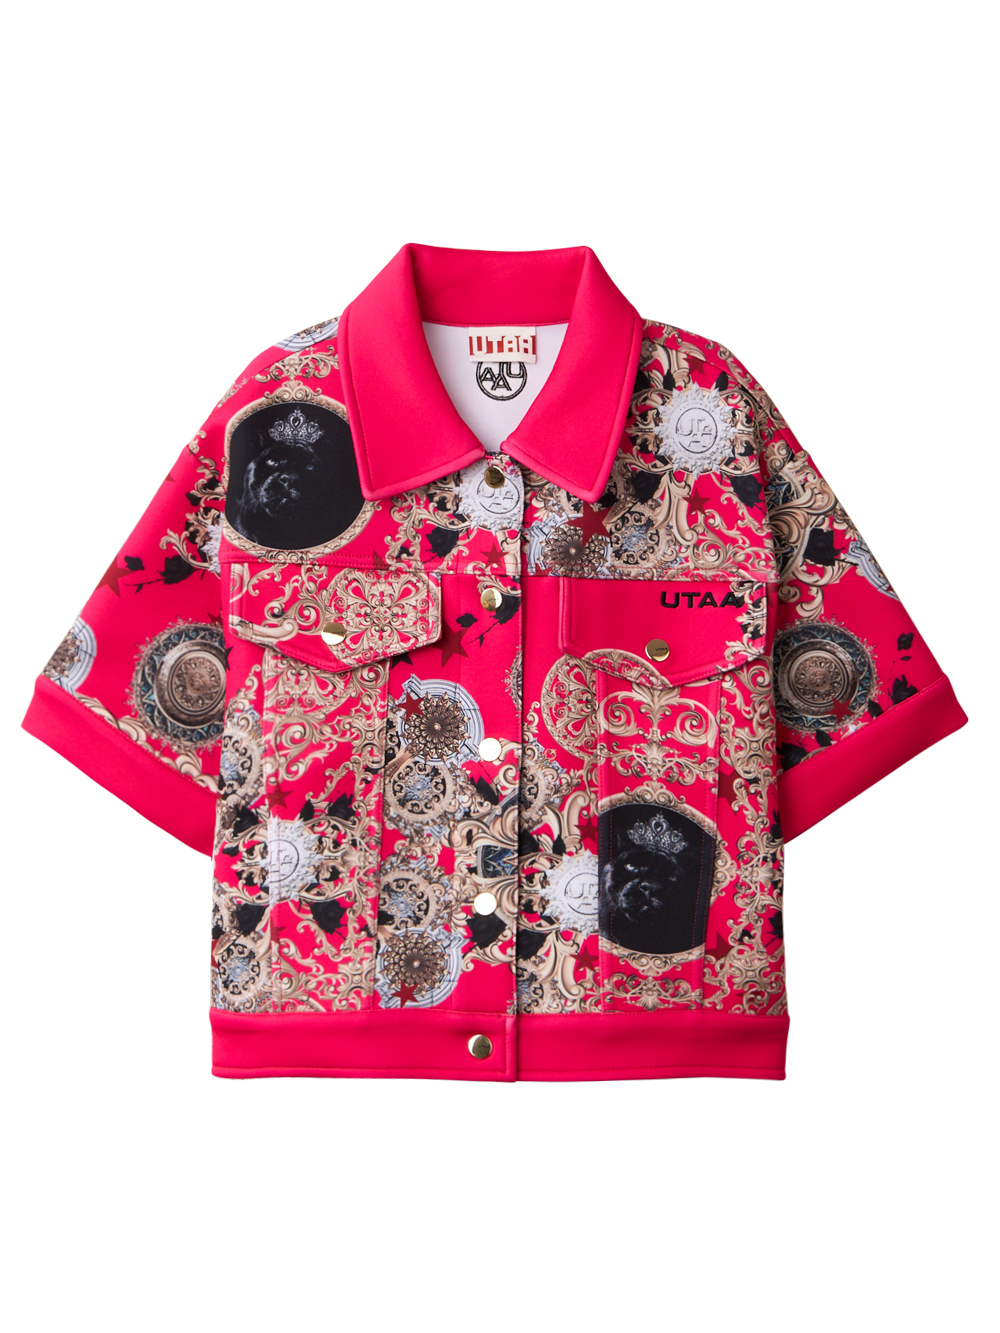 UTAA Crown Panther Baroque Jacket : Womens&#039;s Pink (UC2STF420PK)